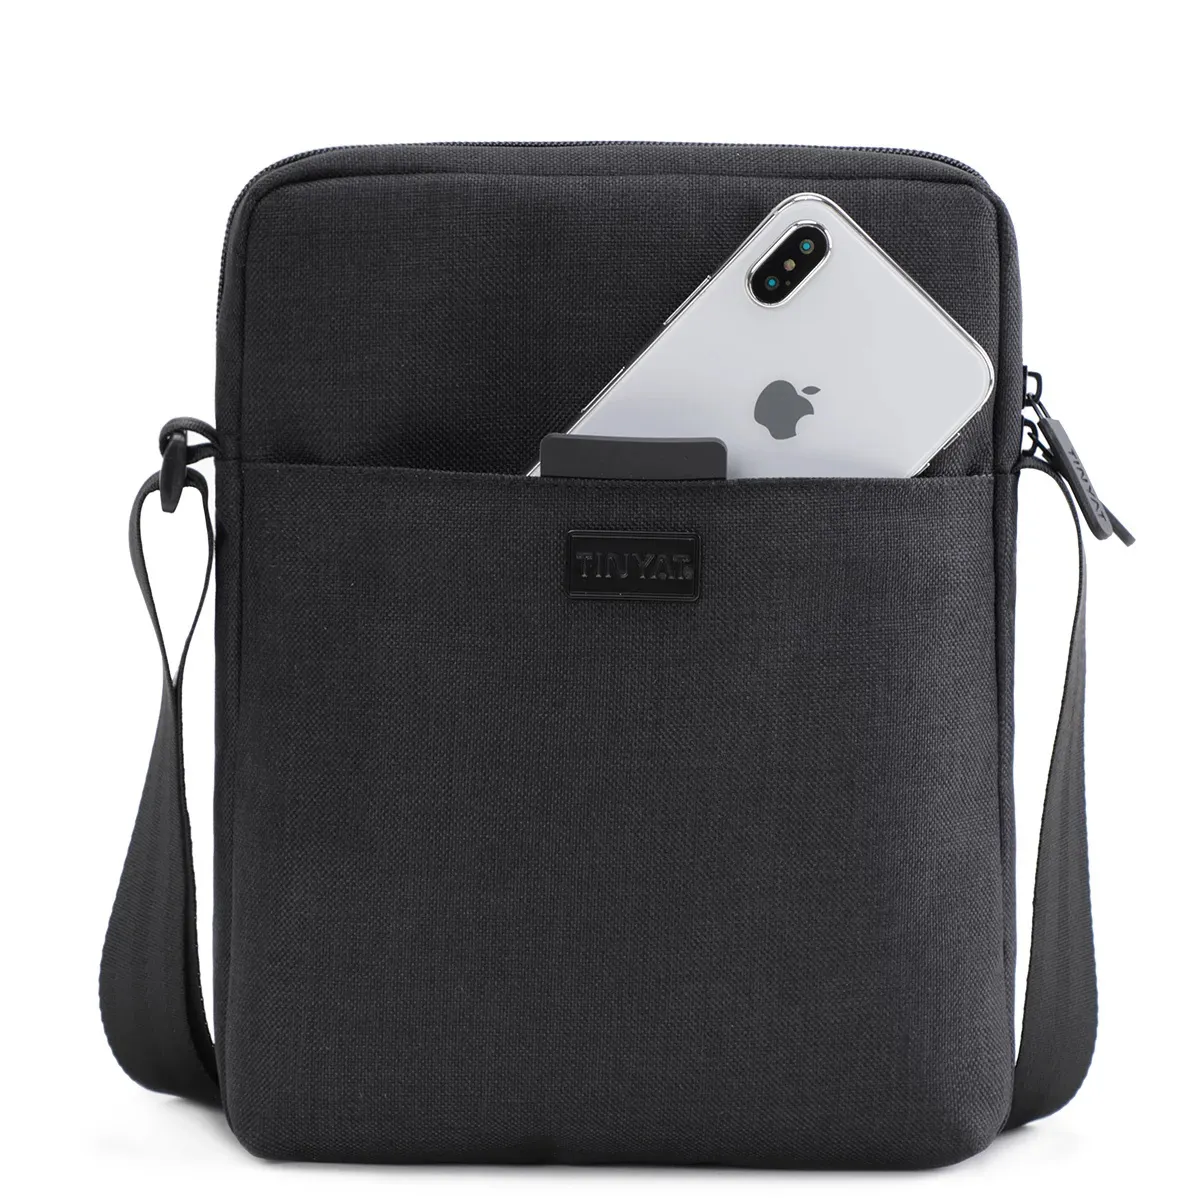 Men's Bags Light Canvas Shoulder Bag For 7.9' Ipad Casual Crossbody Waterproof Business Shoulder bag for men